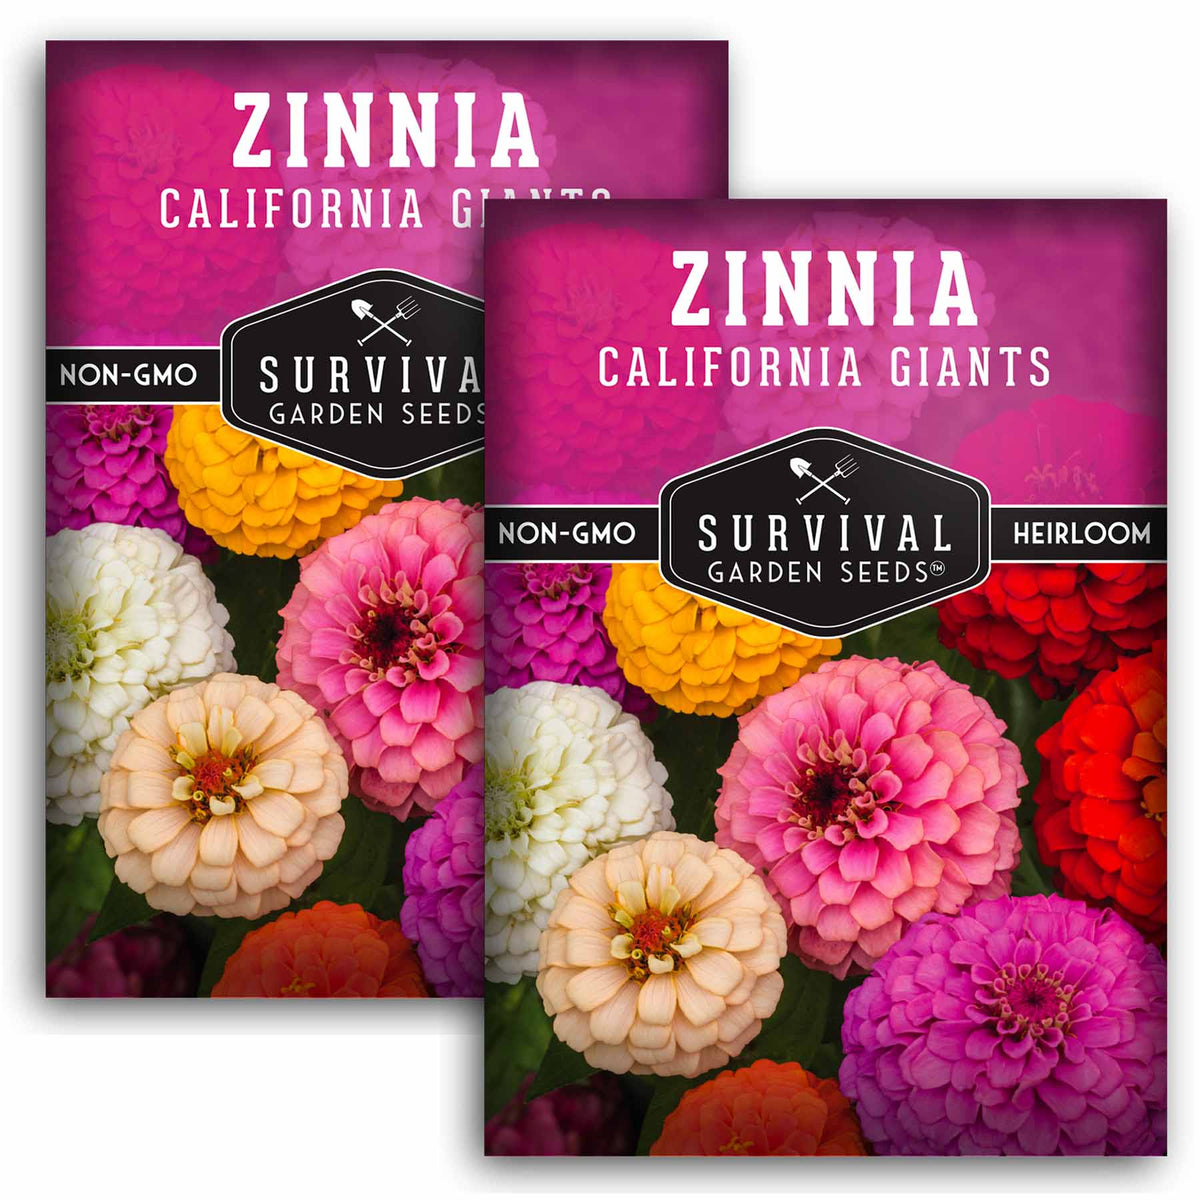 2 Packets of California Giants Zinnia seeds